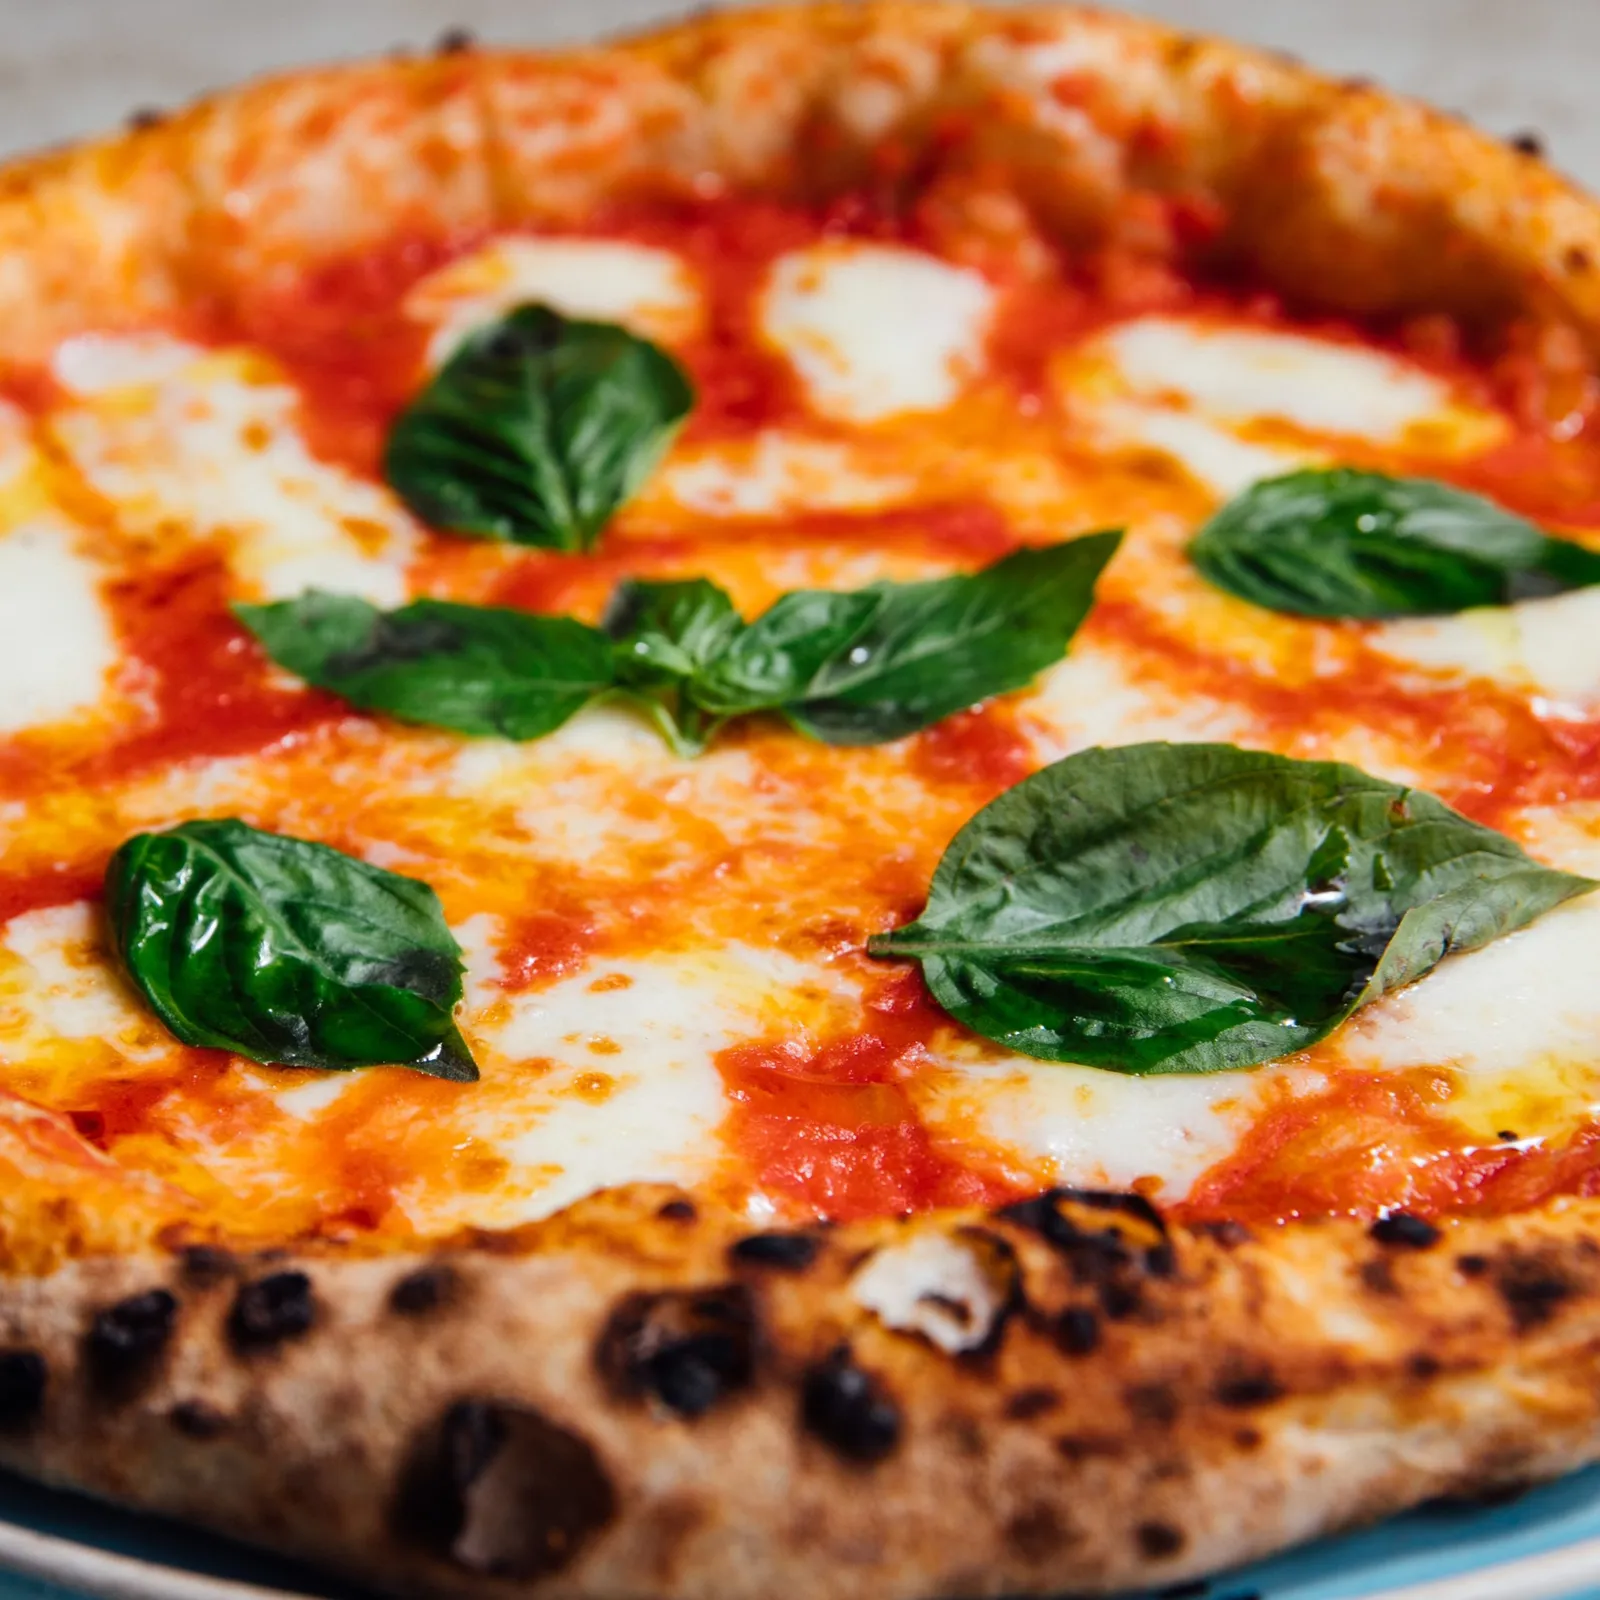 Massilia Cucina Italiana, Resto Pizza Baru yang Sudah Buka di Jakarta 